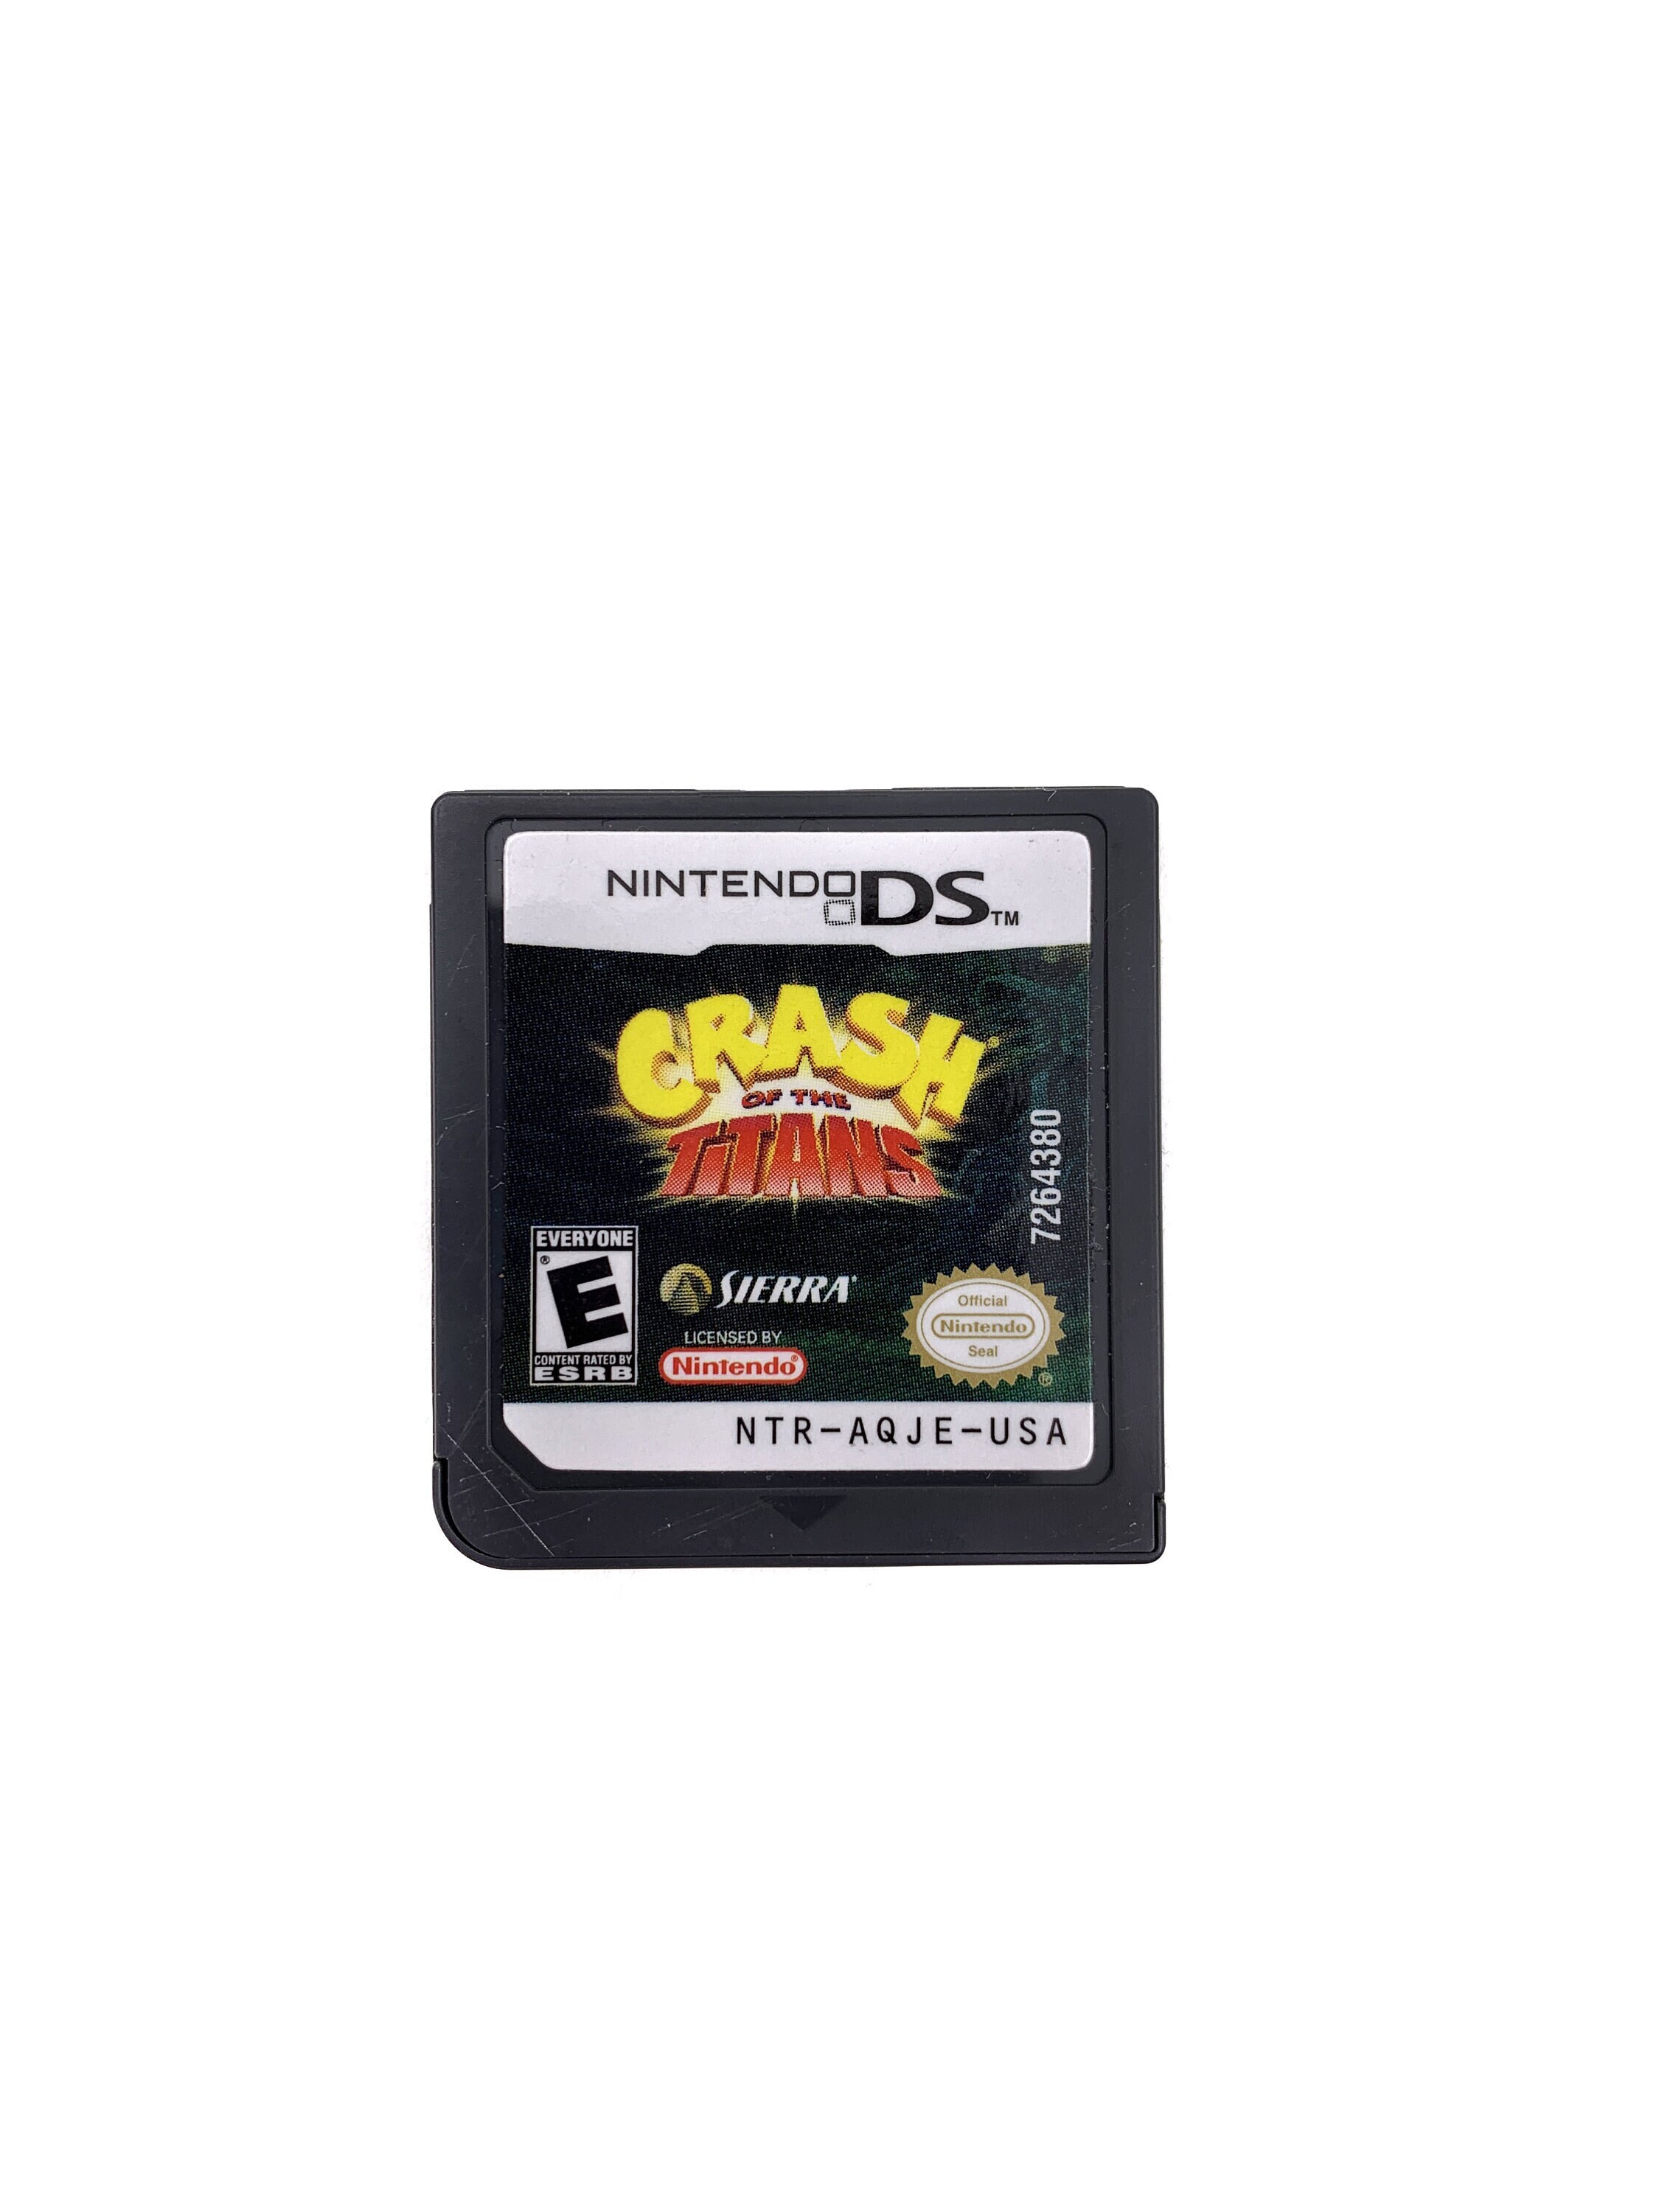 Buy Nintendo DS Crash Of The Titans